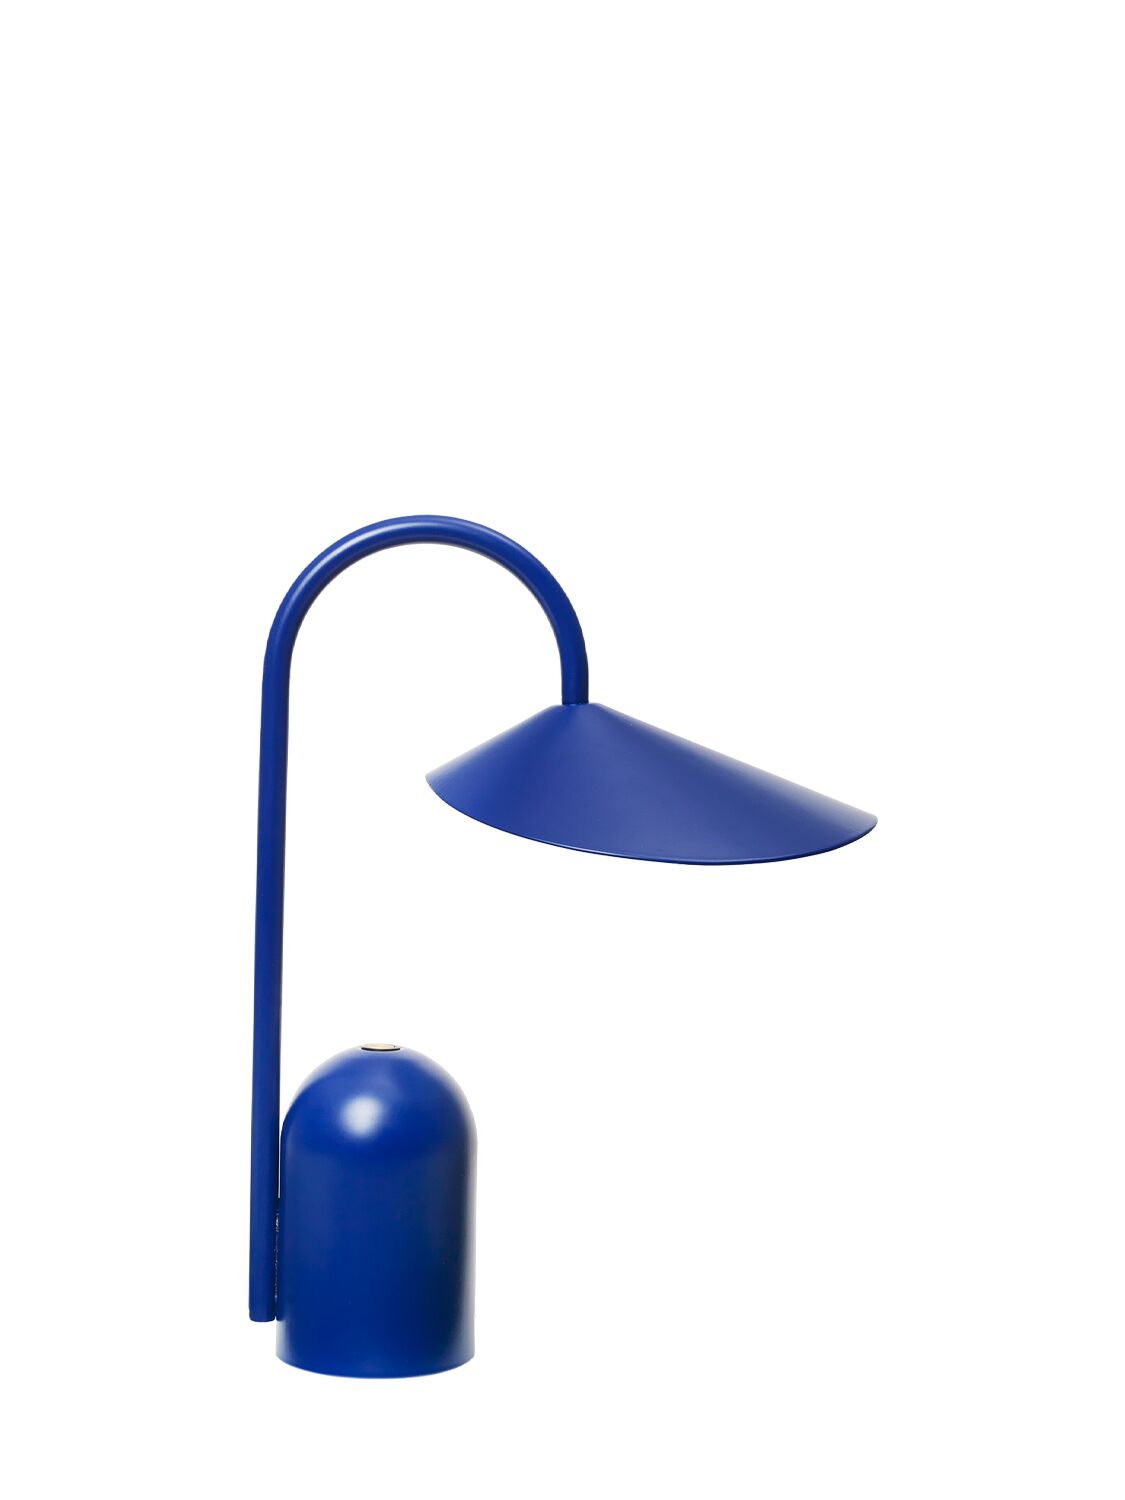 Ferm Living Bright Blue Arum Portable Lamp